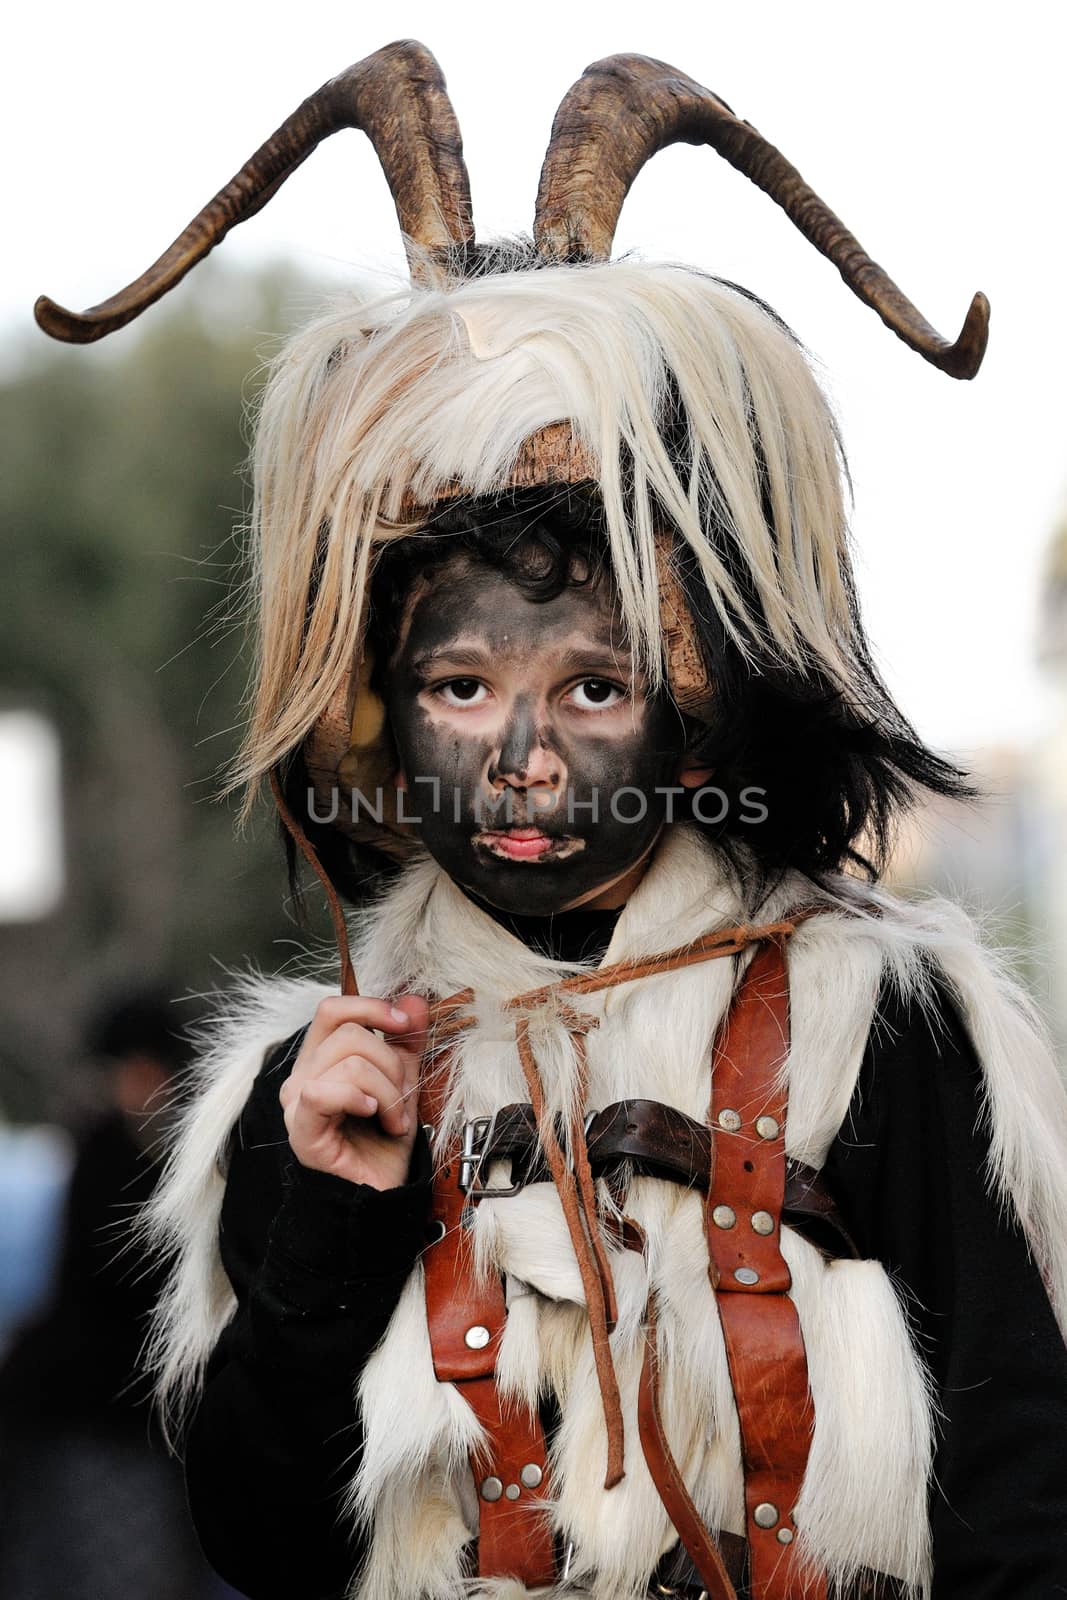 Orani, Sardinia - March 6, 2011: Parade of traditional masks of Sardinia at the Carnival of 6 March 2011 in Orani, Sardinia.